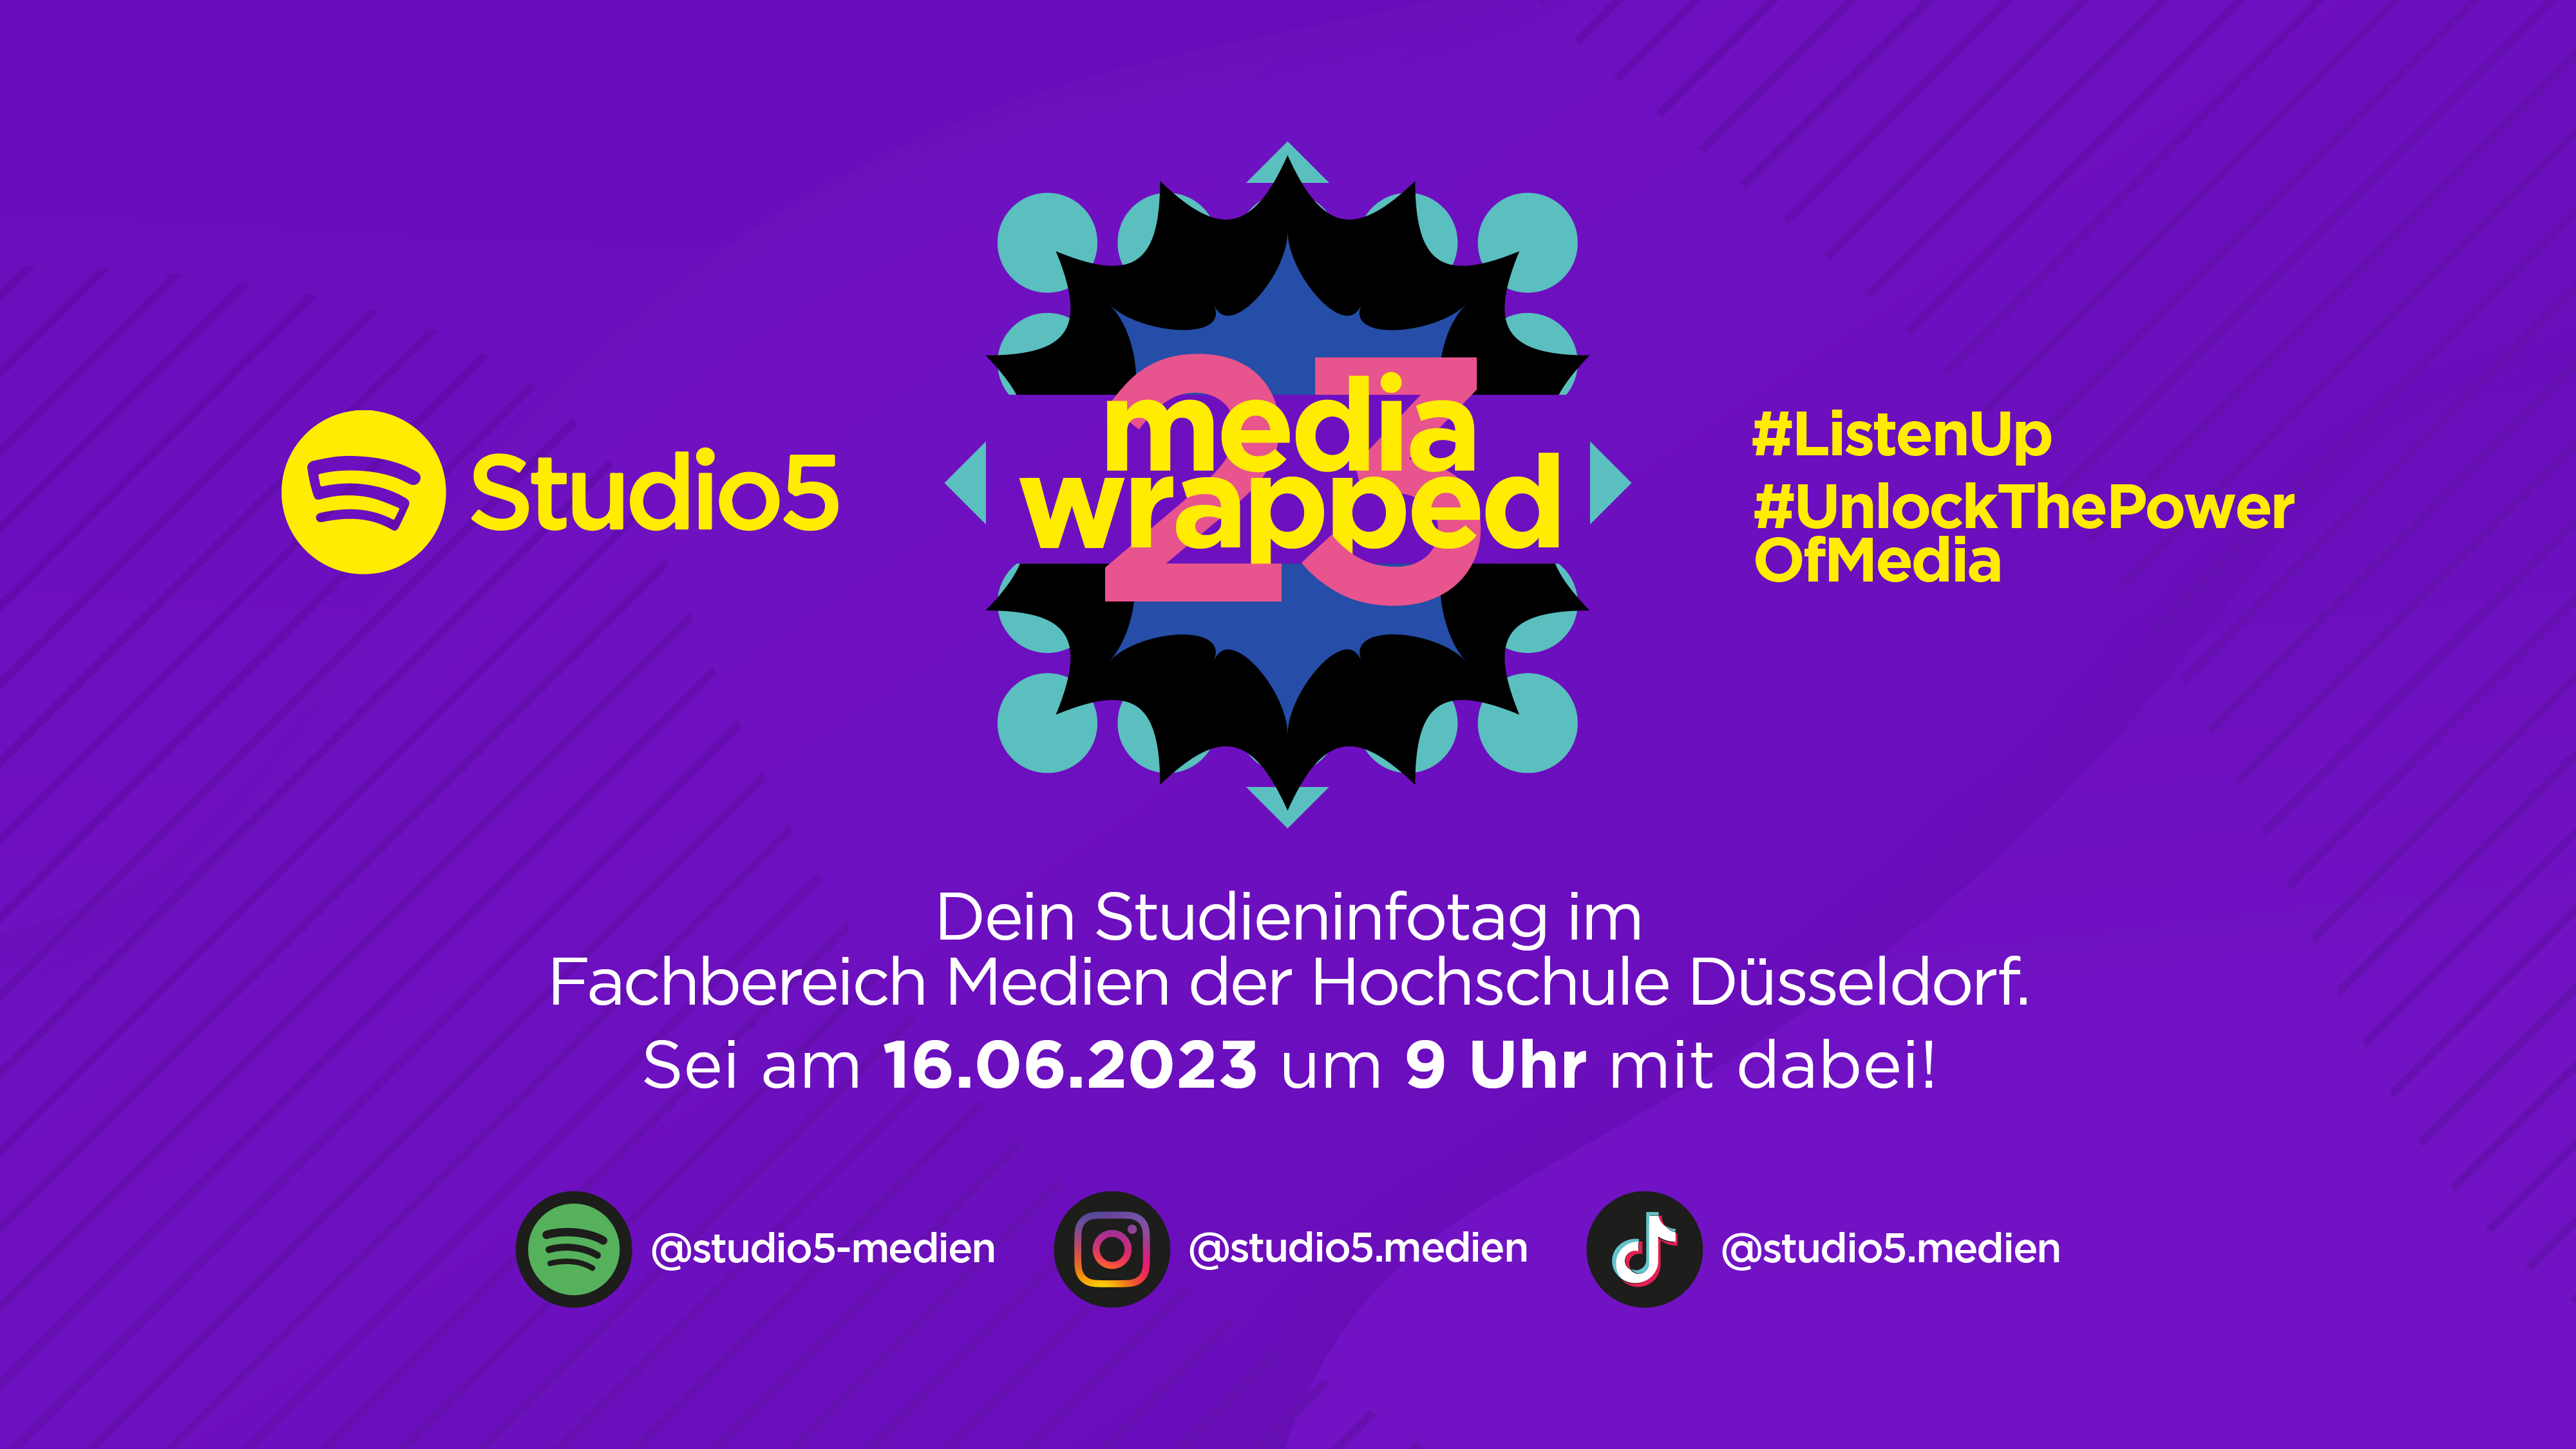 Studio5 Media Wrapped Logobild